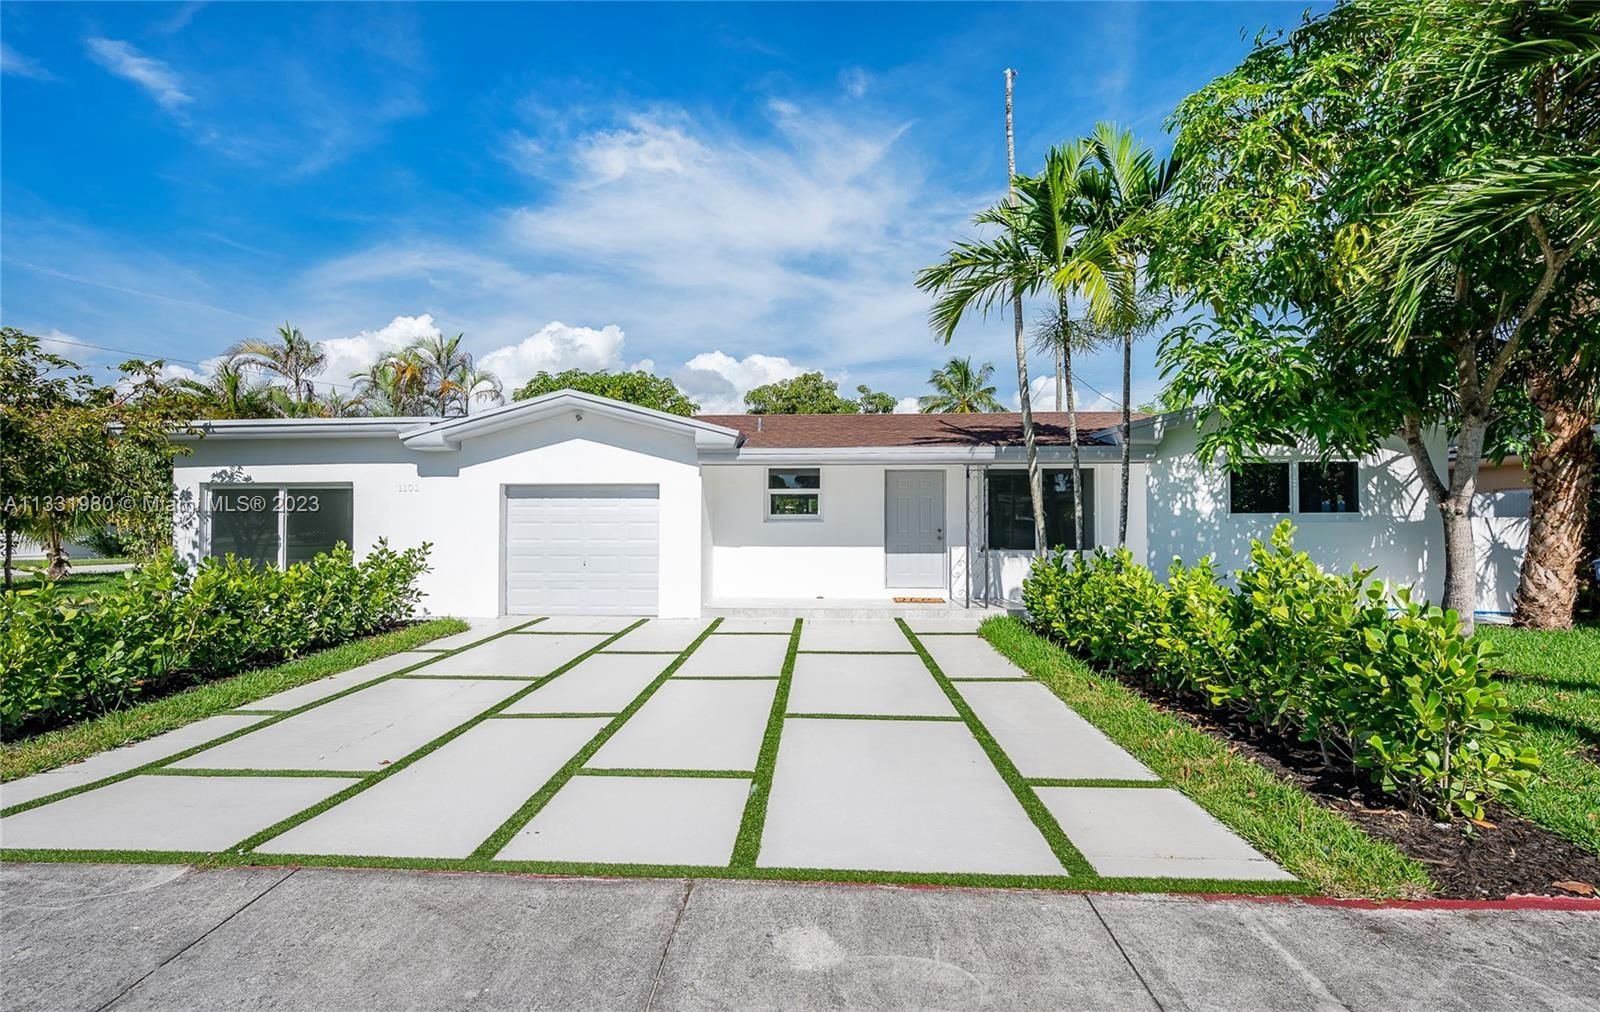 Real estate property located at 1101 110th Ter, Miami-Dade County, Miami, FL